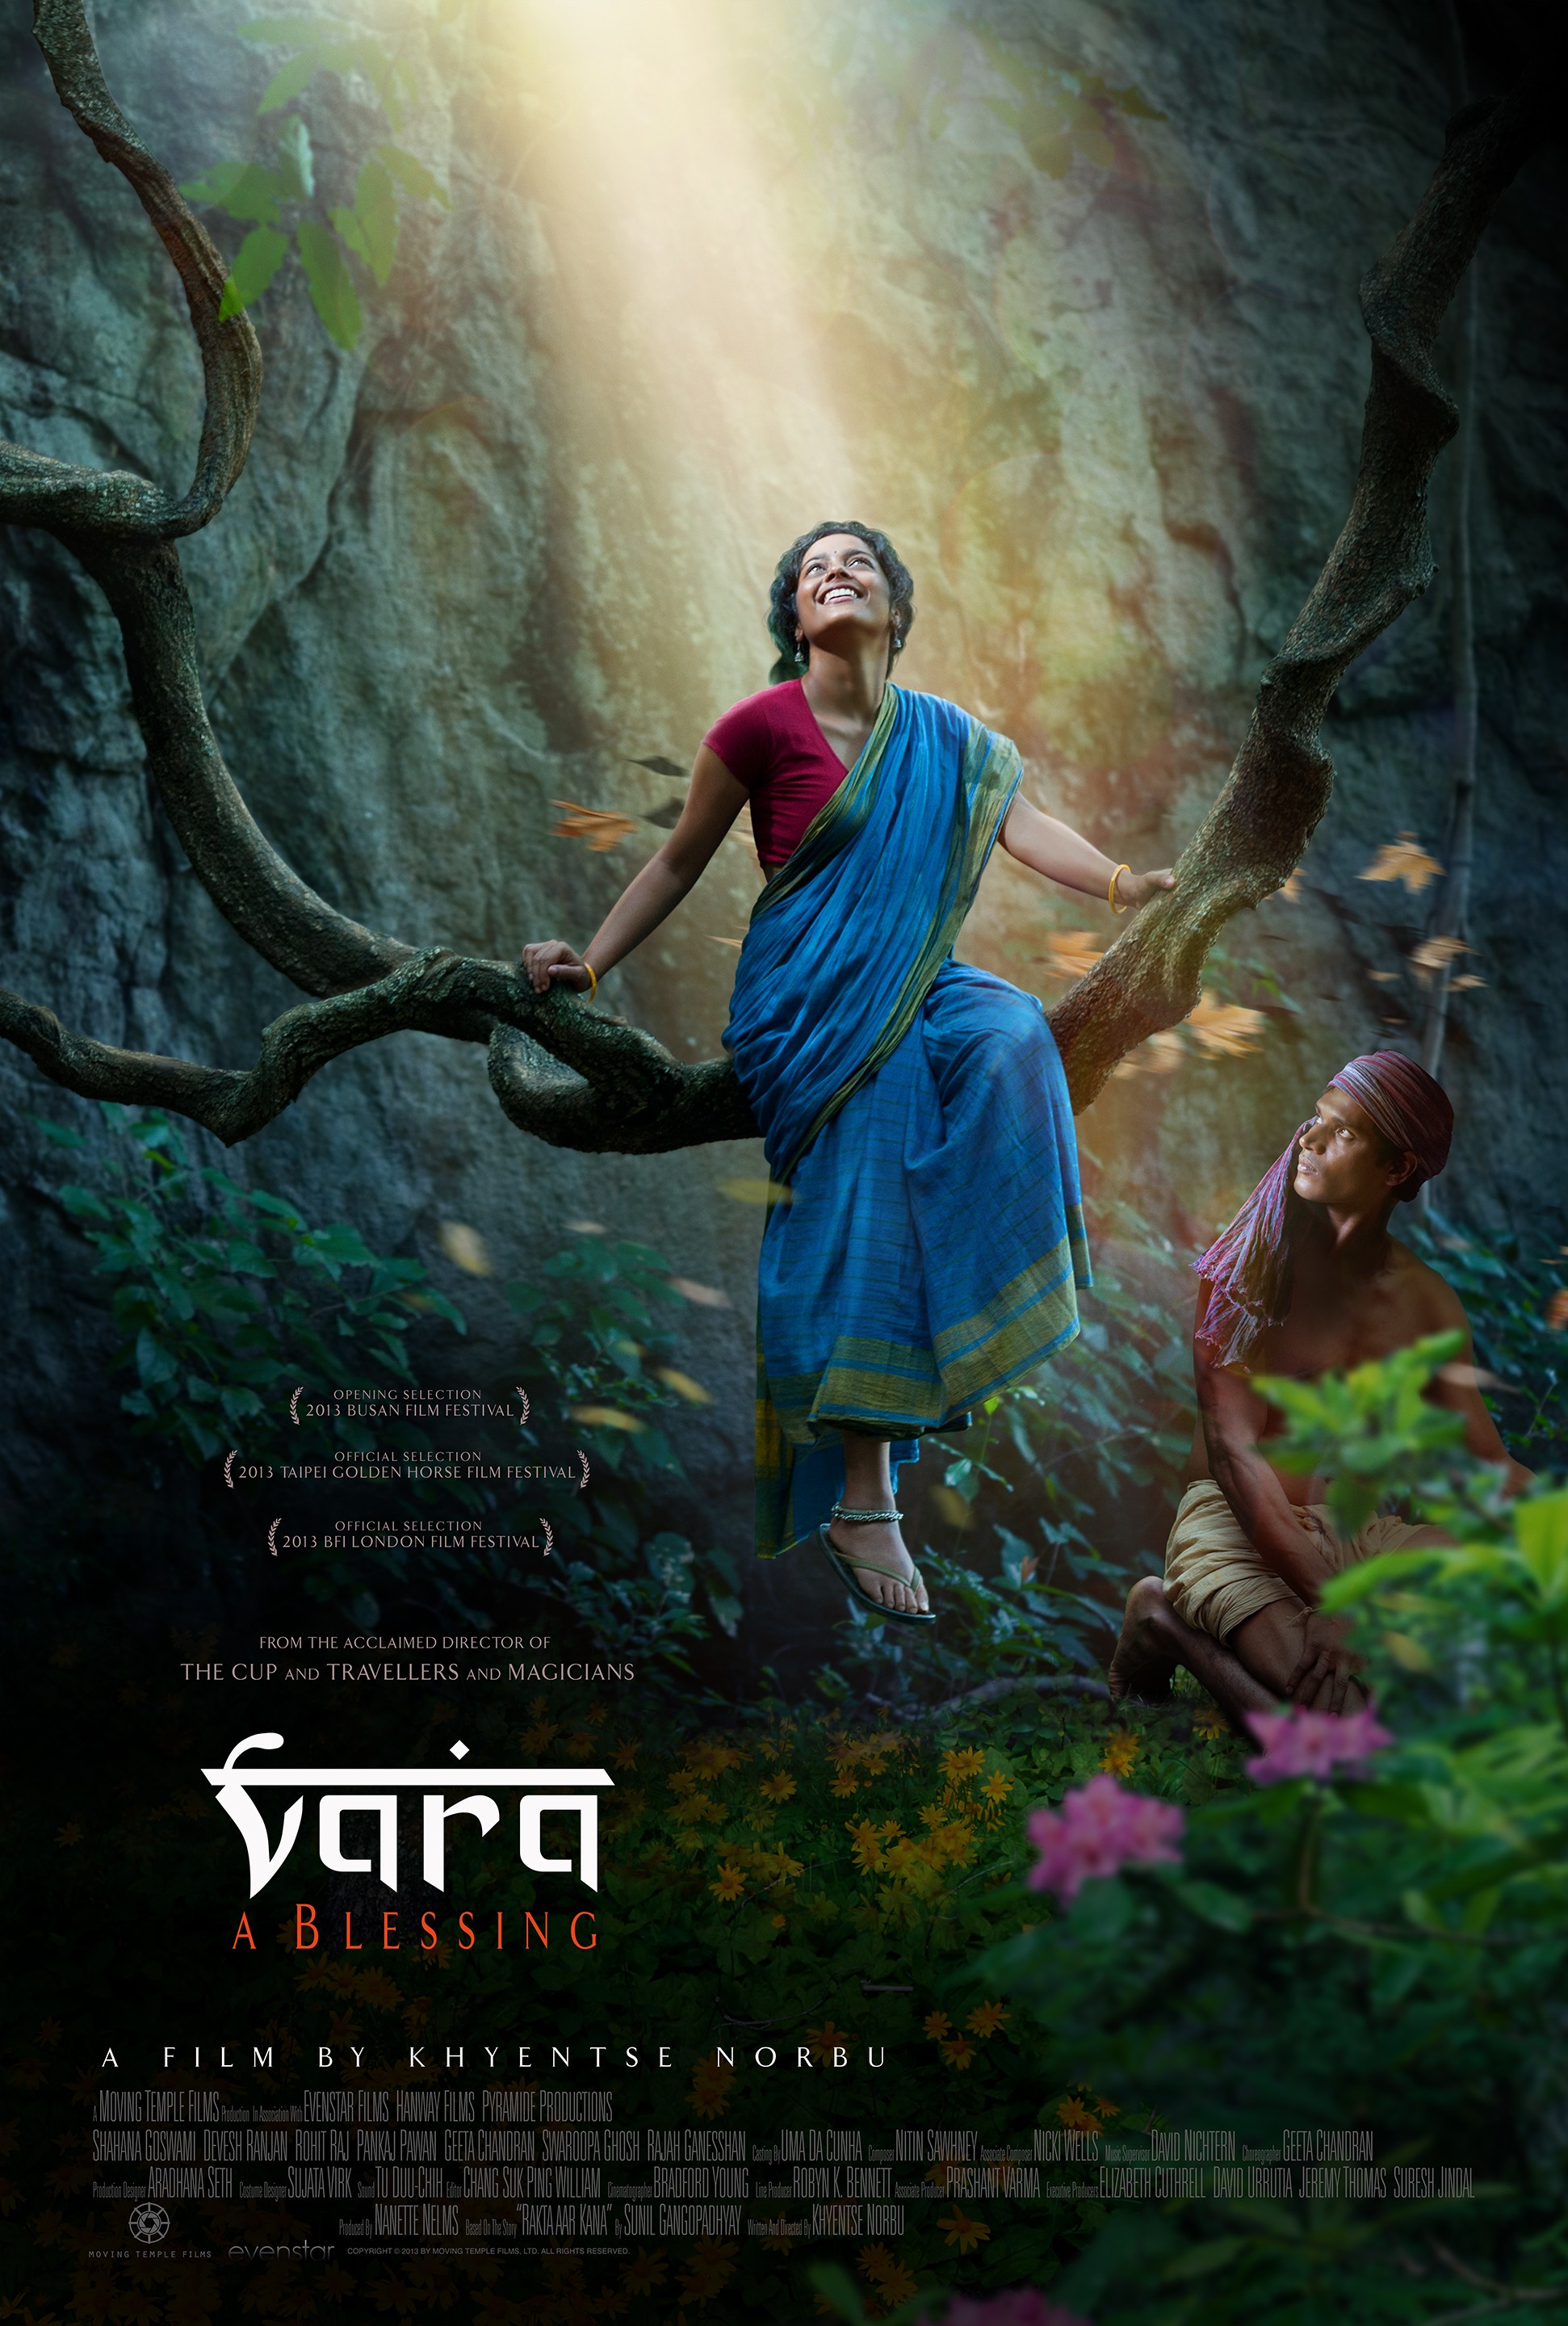 Mega Sized Movie Poster Image for Vara: A Blessing 